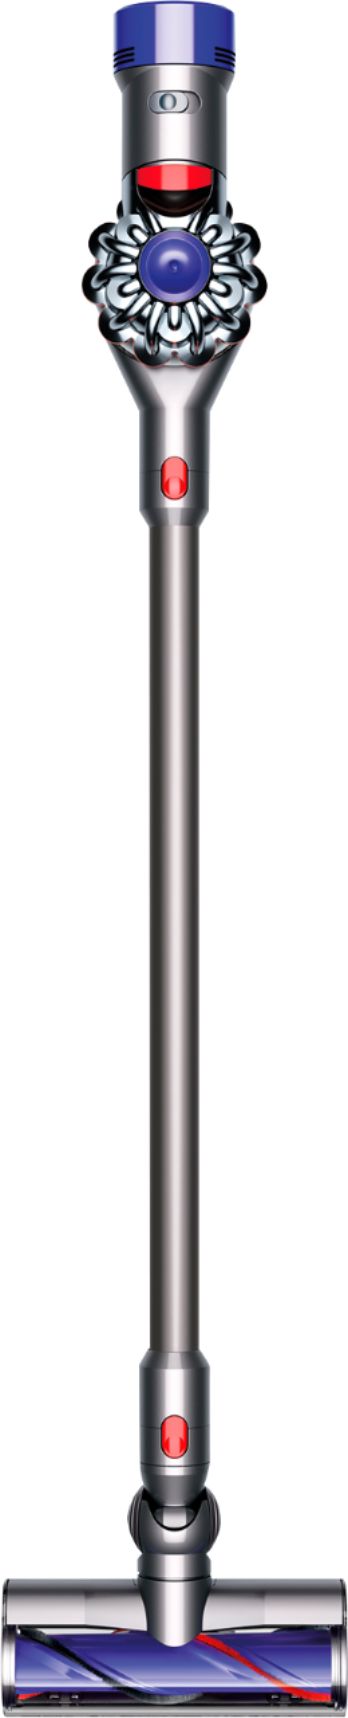 Dyson V7 Animal Cord Free Stick Vacuum, Is Dyson V7 Motorhead Safe For Hardwood Floors